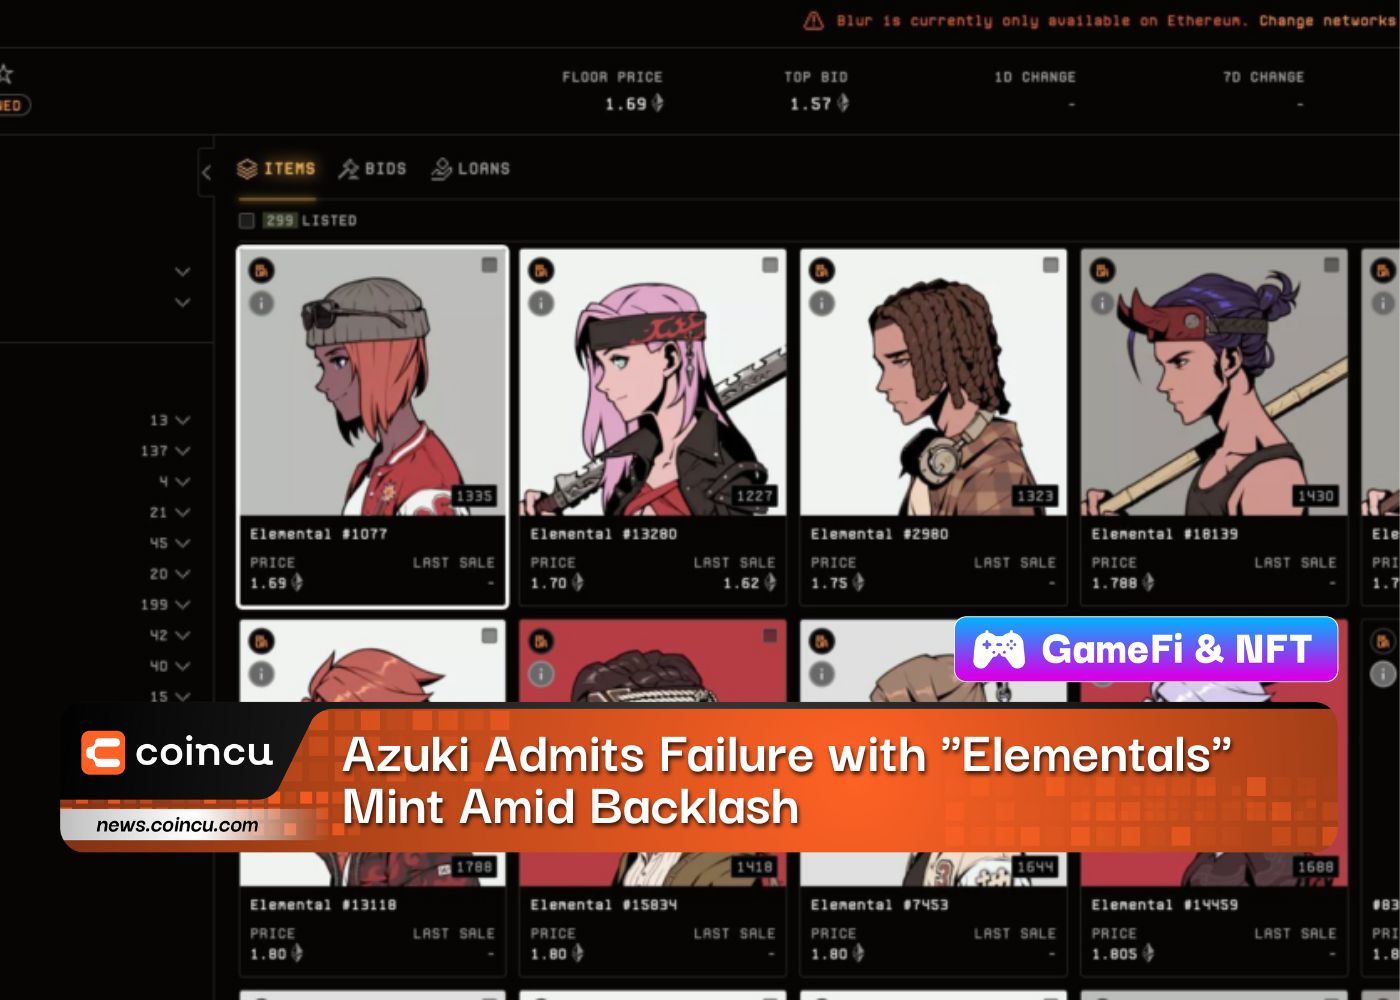 Azuki Admits Failure with Elementals